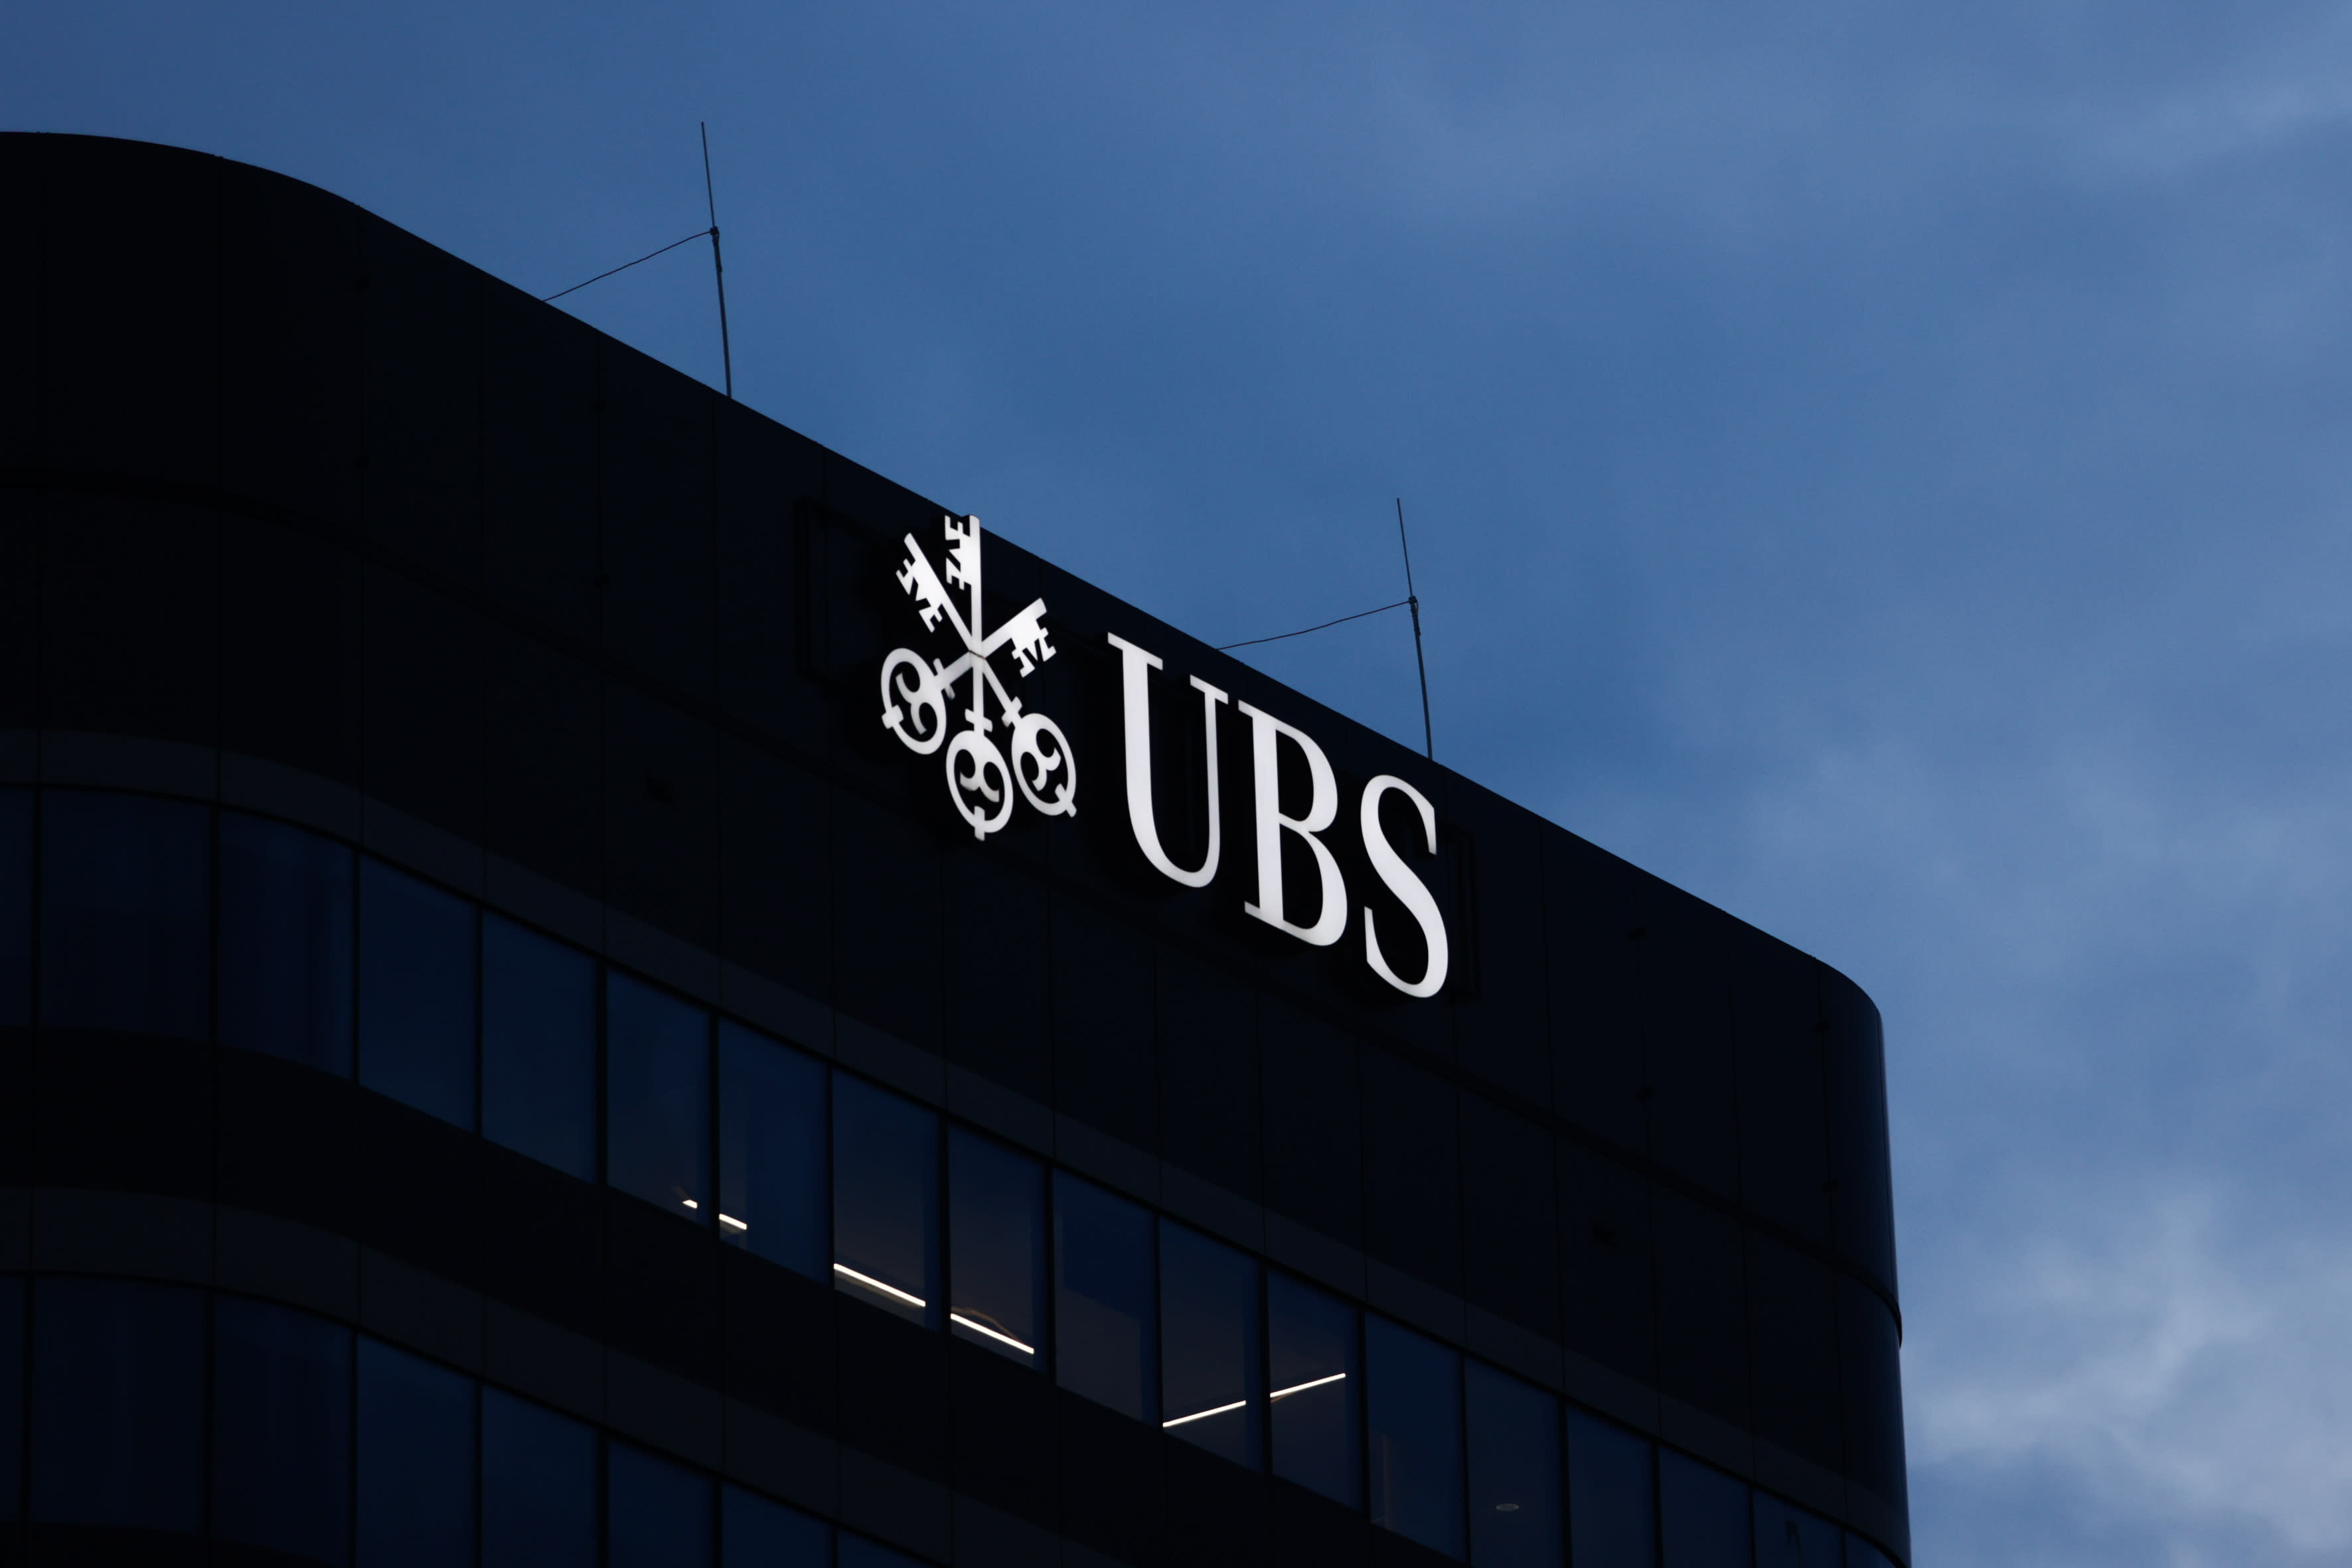 Швајцарски банкарски гигант УБС намерава да покрене откуп акција у вредности до 2 милијарде долара